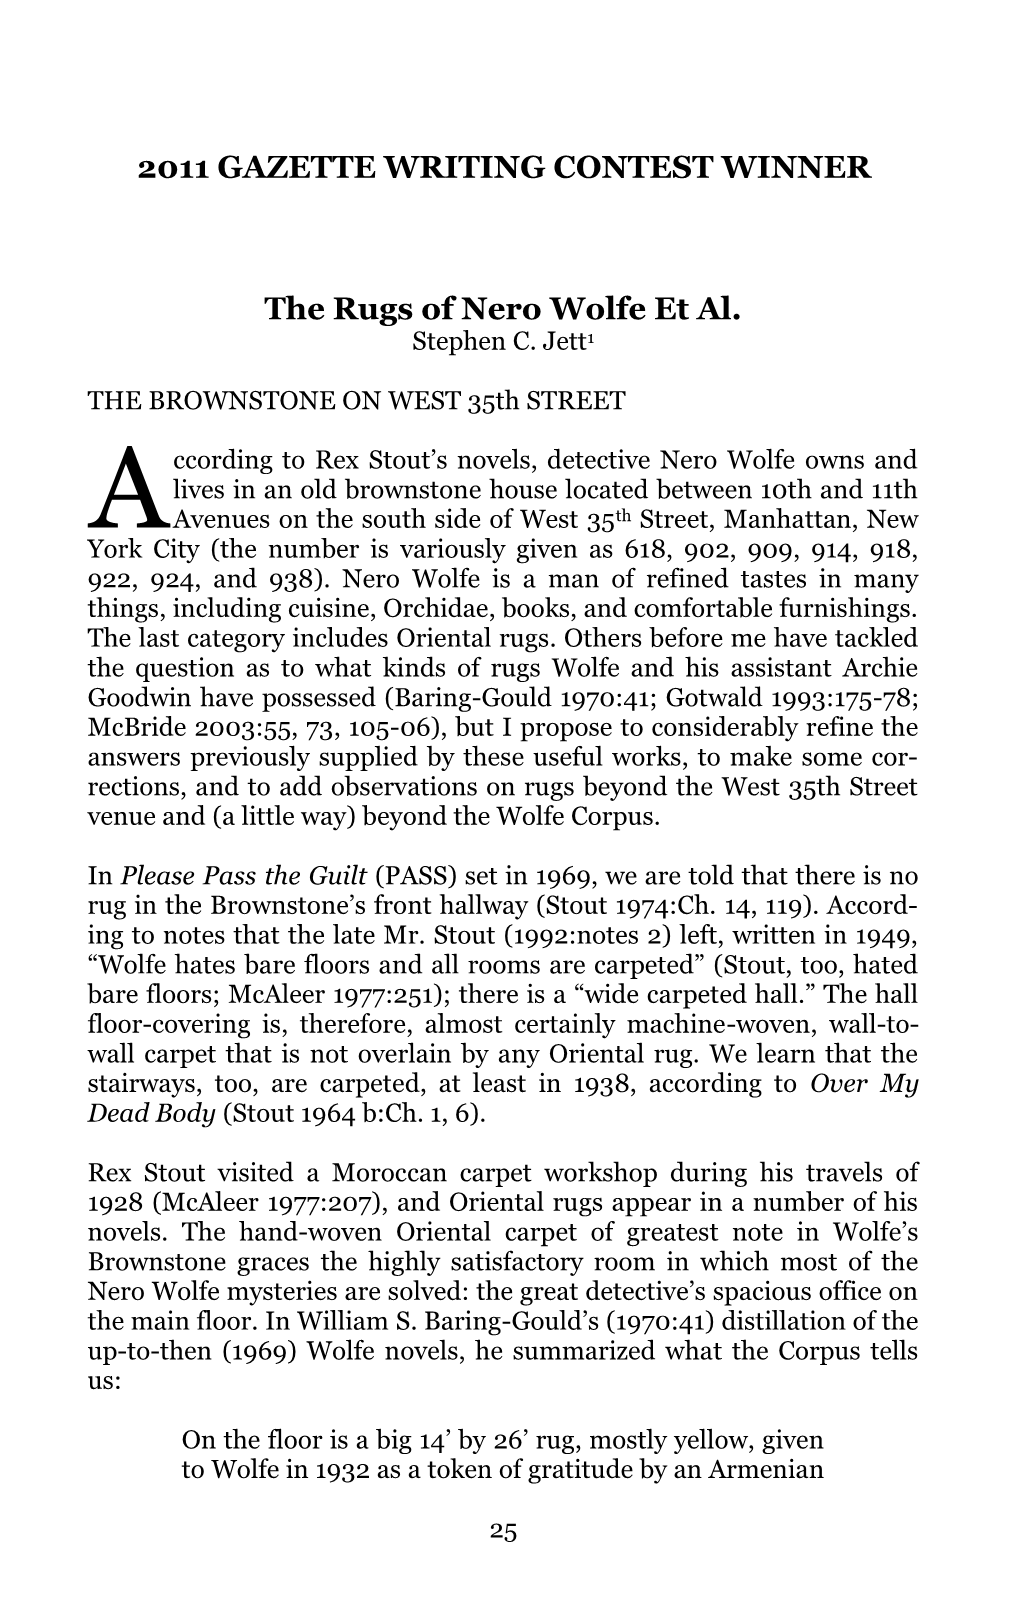 The Rugs of Nero Wolfe Et Al